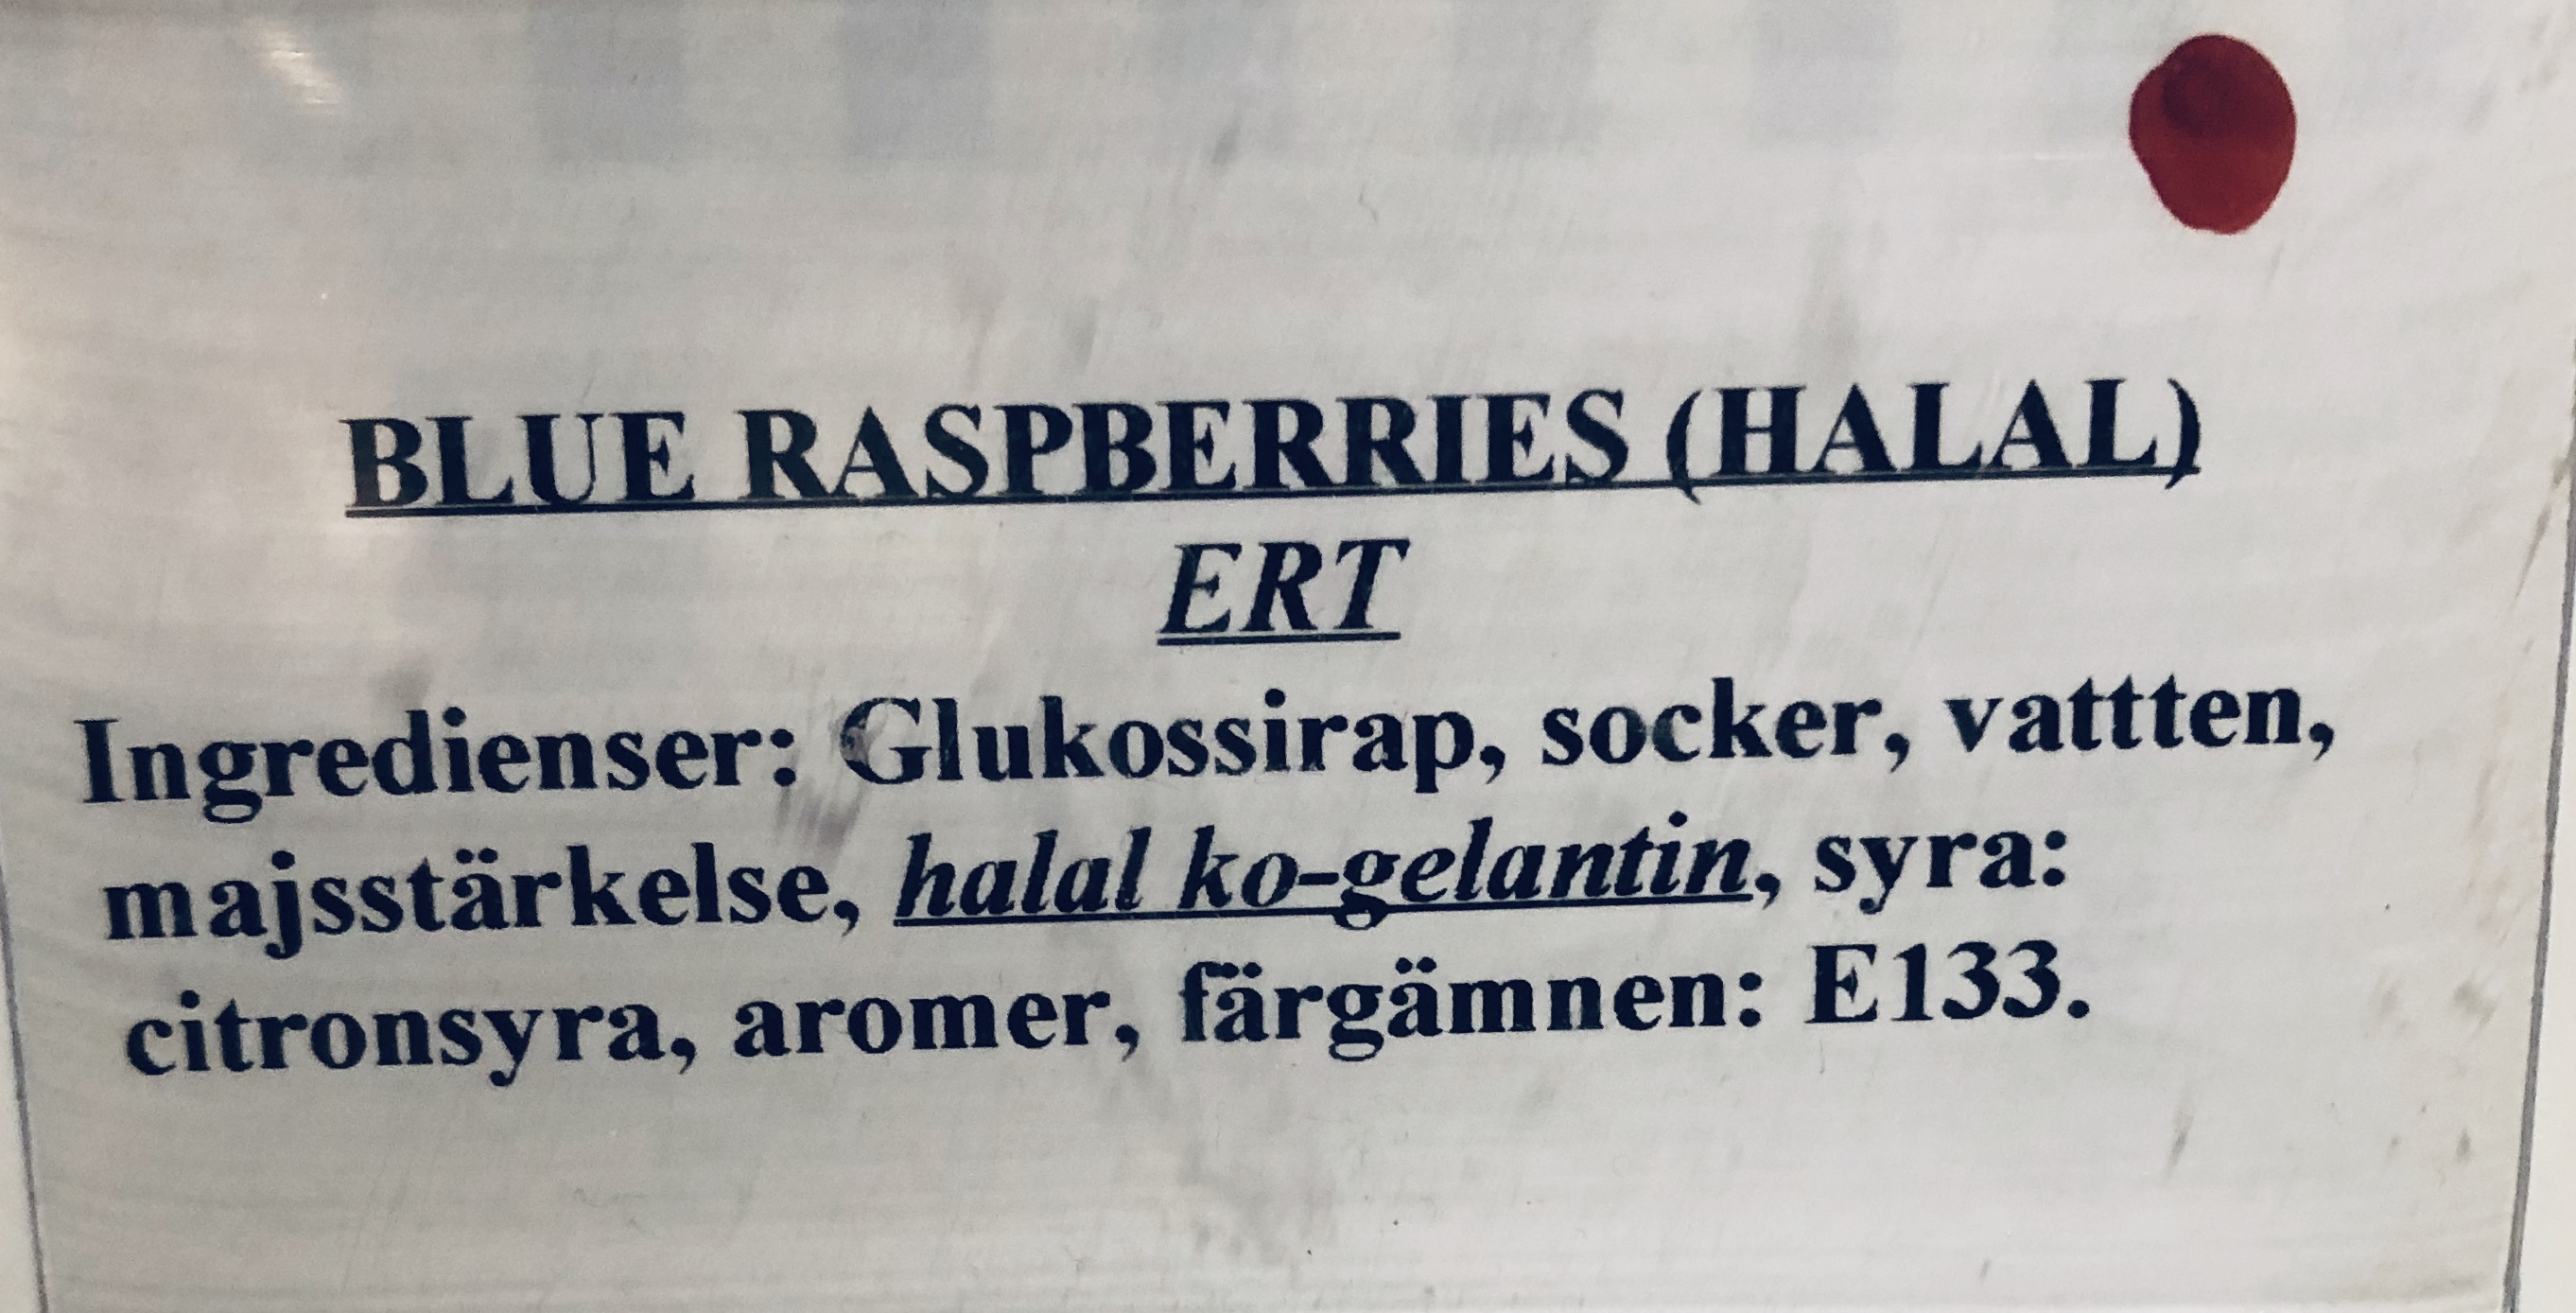 Blue raspbarries (halal)